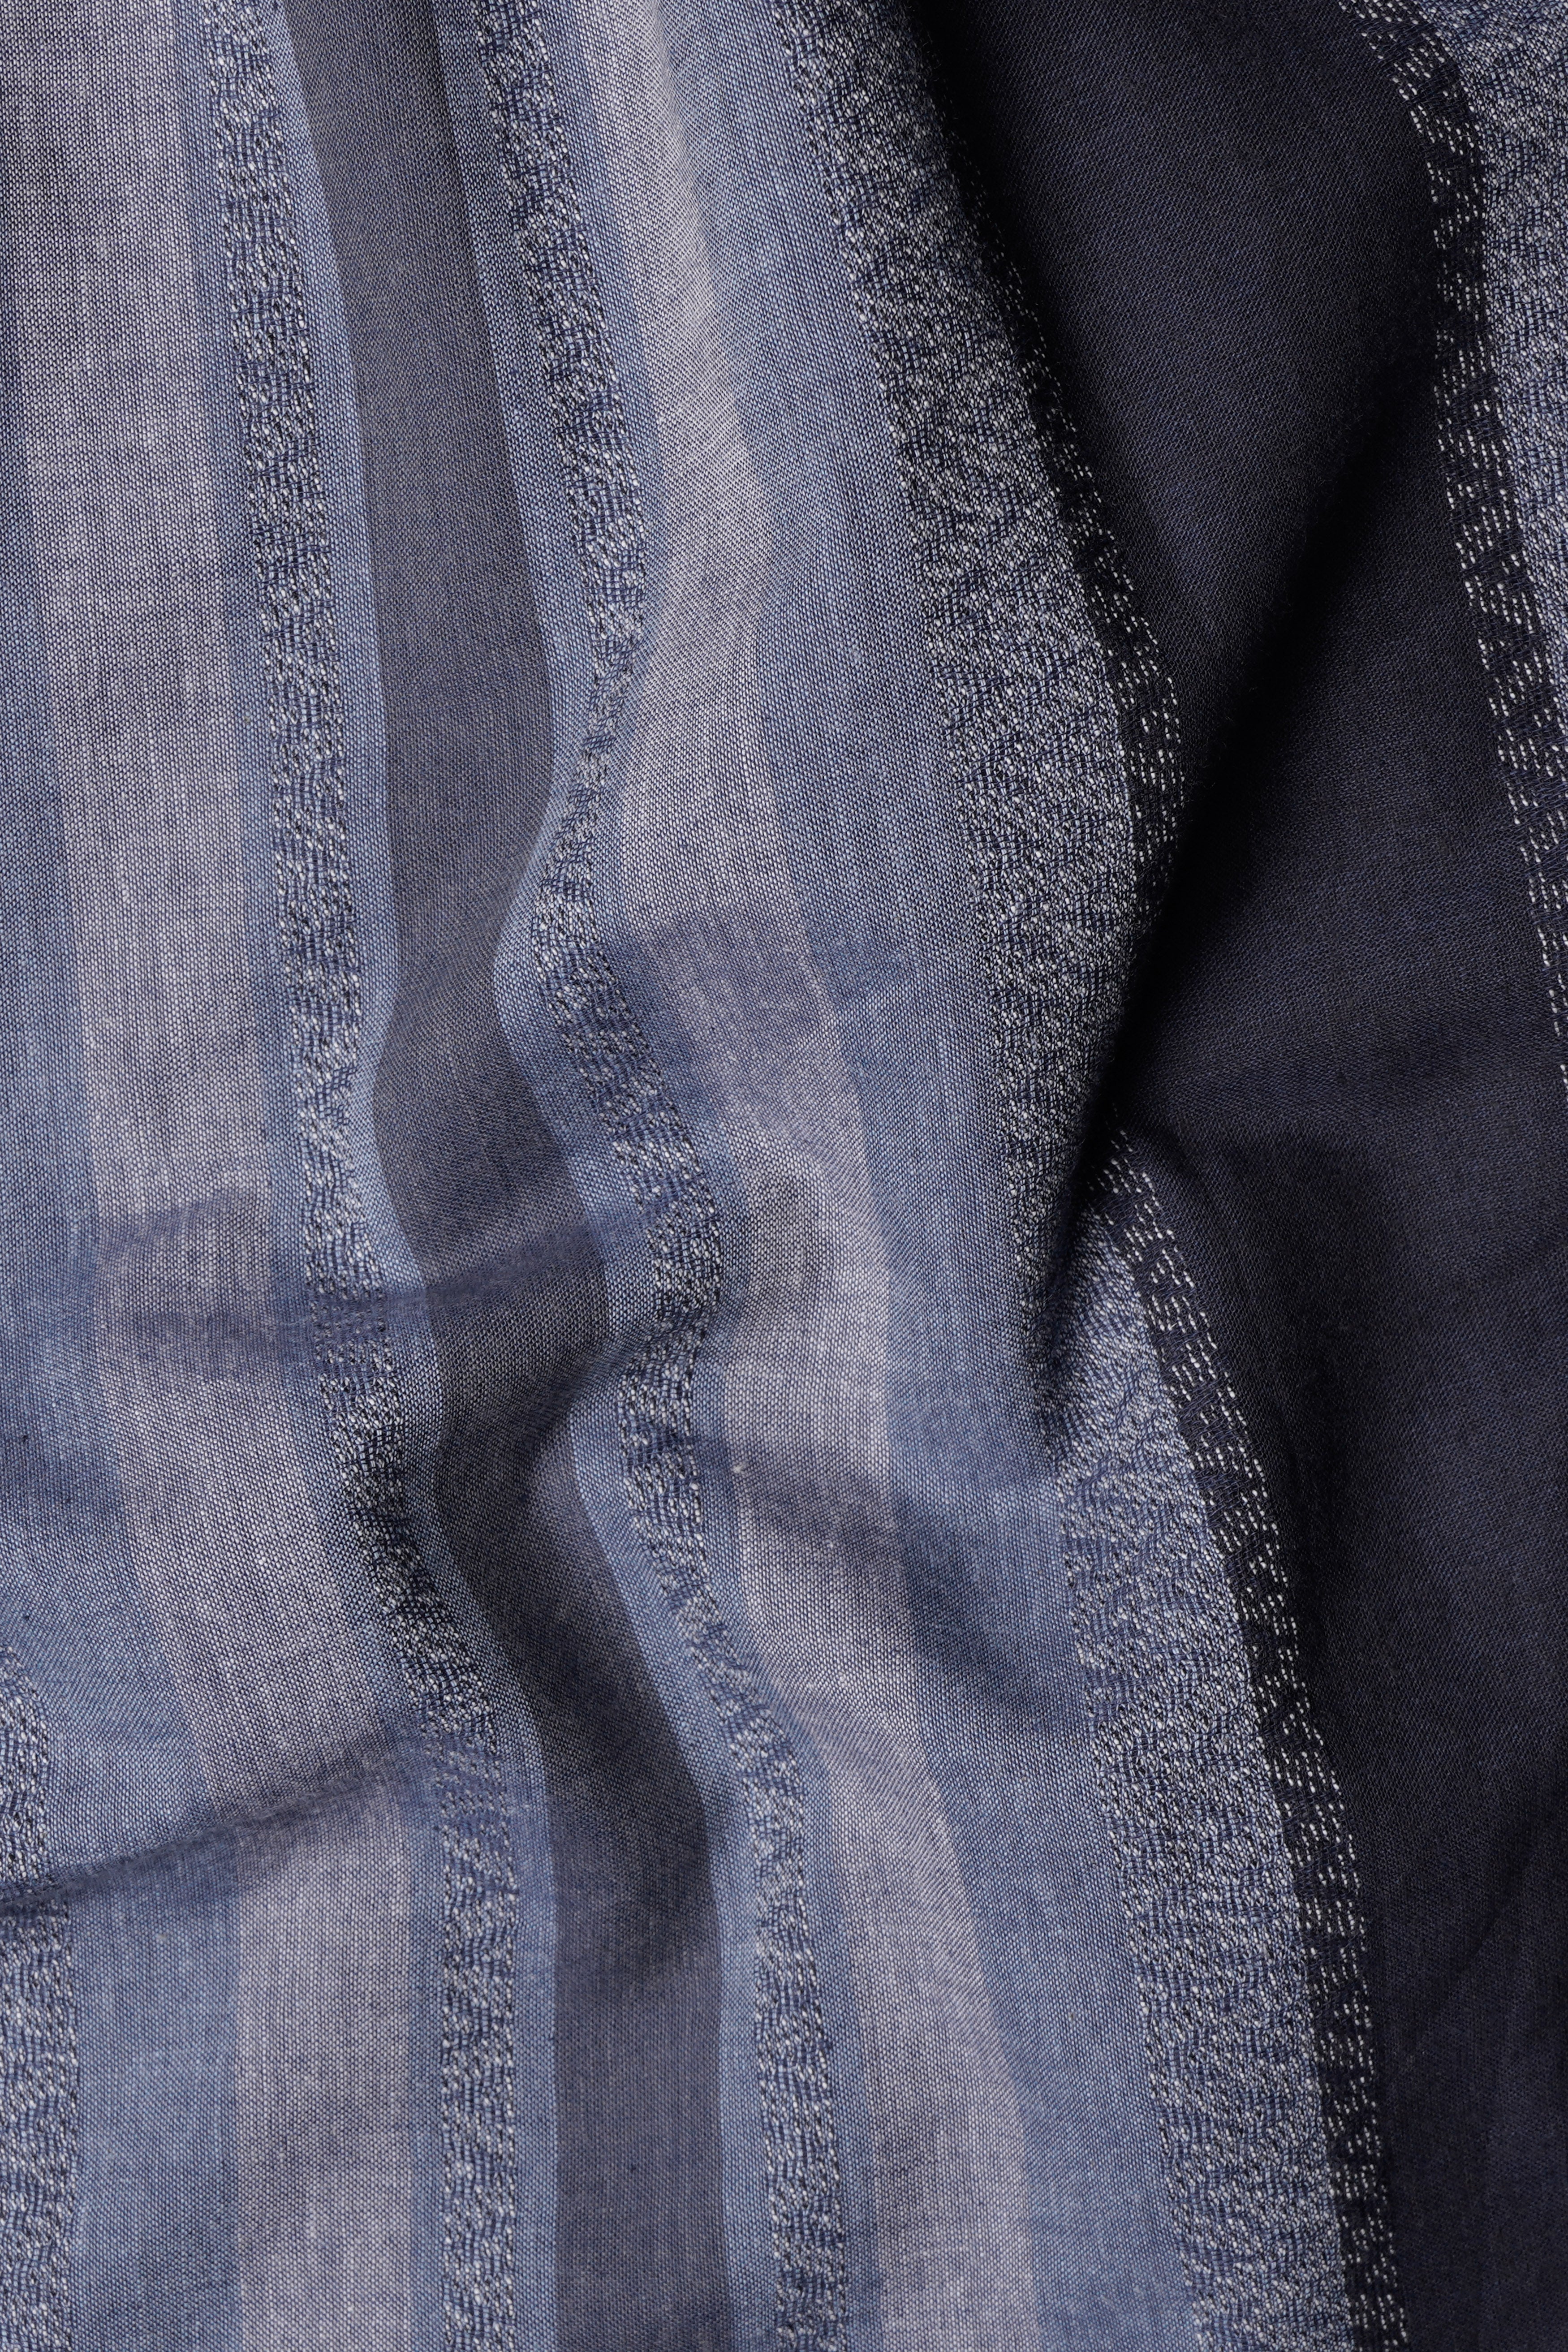 Iridium Blue with Mobster Gray Super Soft Premium Cotton Thigh Length Dress